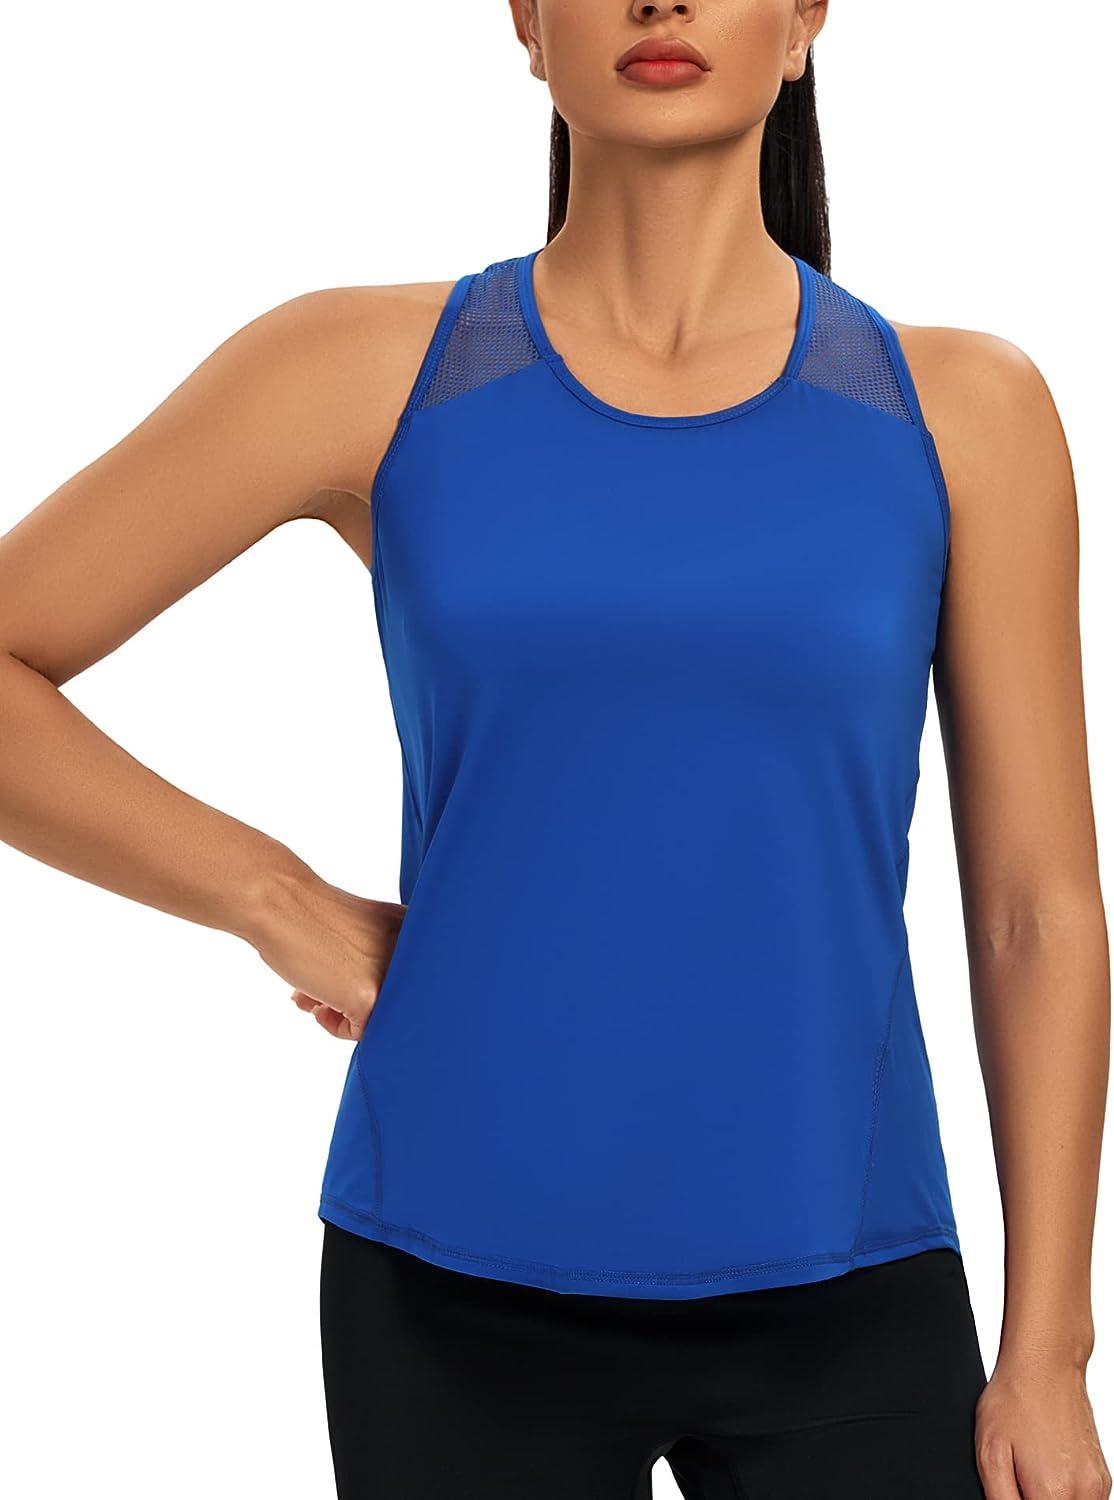 CNJUYEE Workout Tank Tops for Women Soft Mesh Racerback Yoga Shirts Athletic  Running Breathable Womens Summer Tops Dark Blue Medium